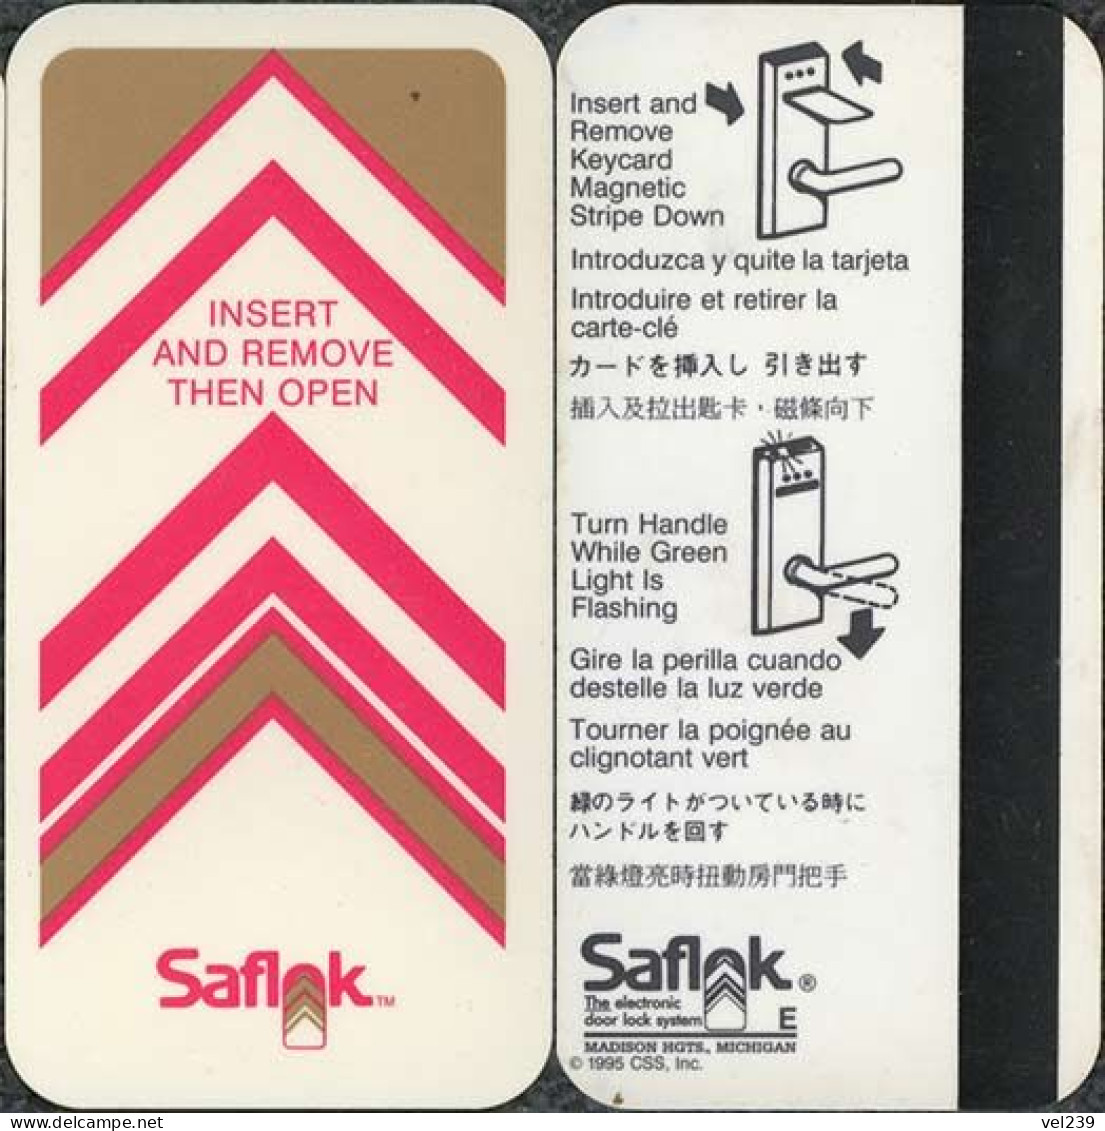 Saflock - Hotelsleutels (kaarten)